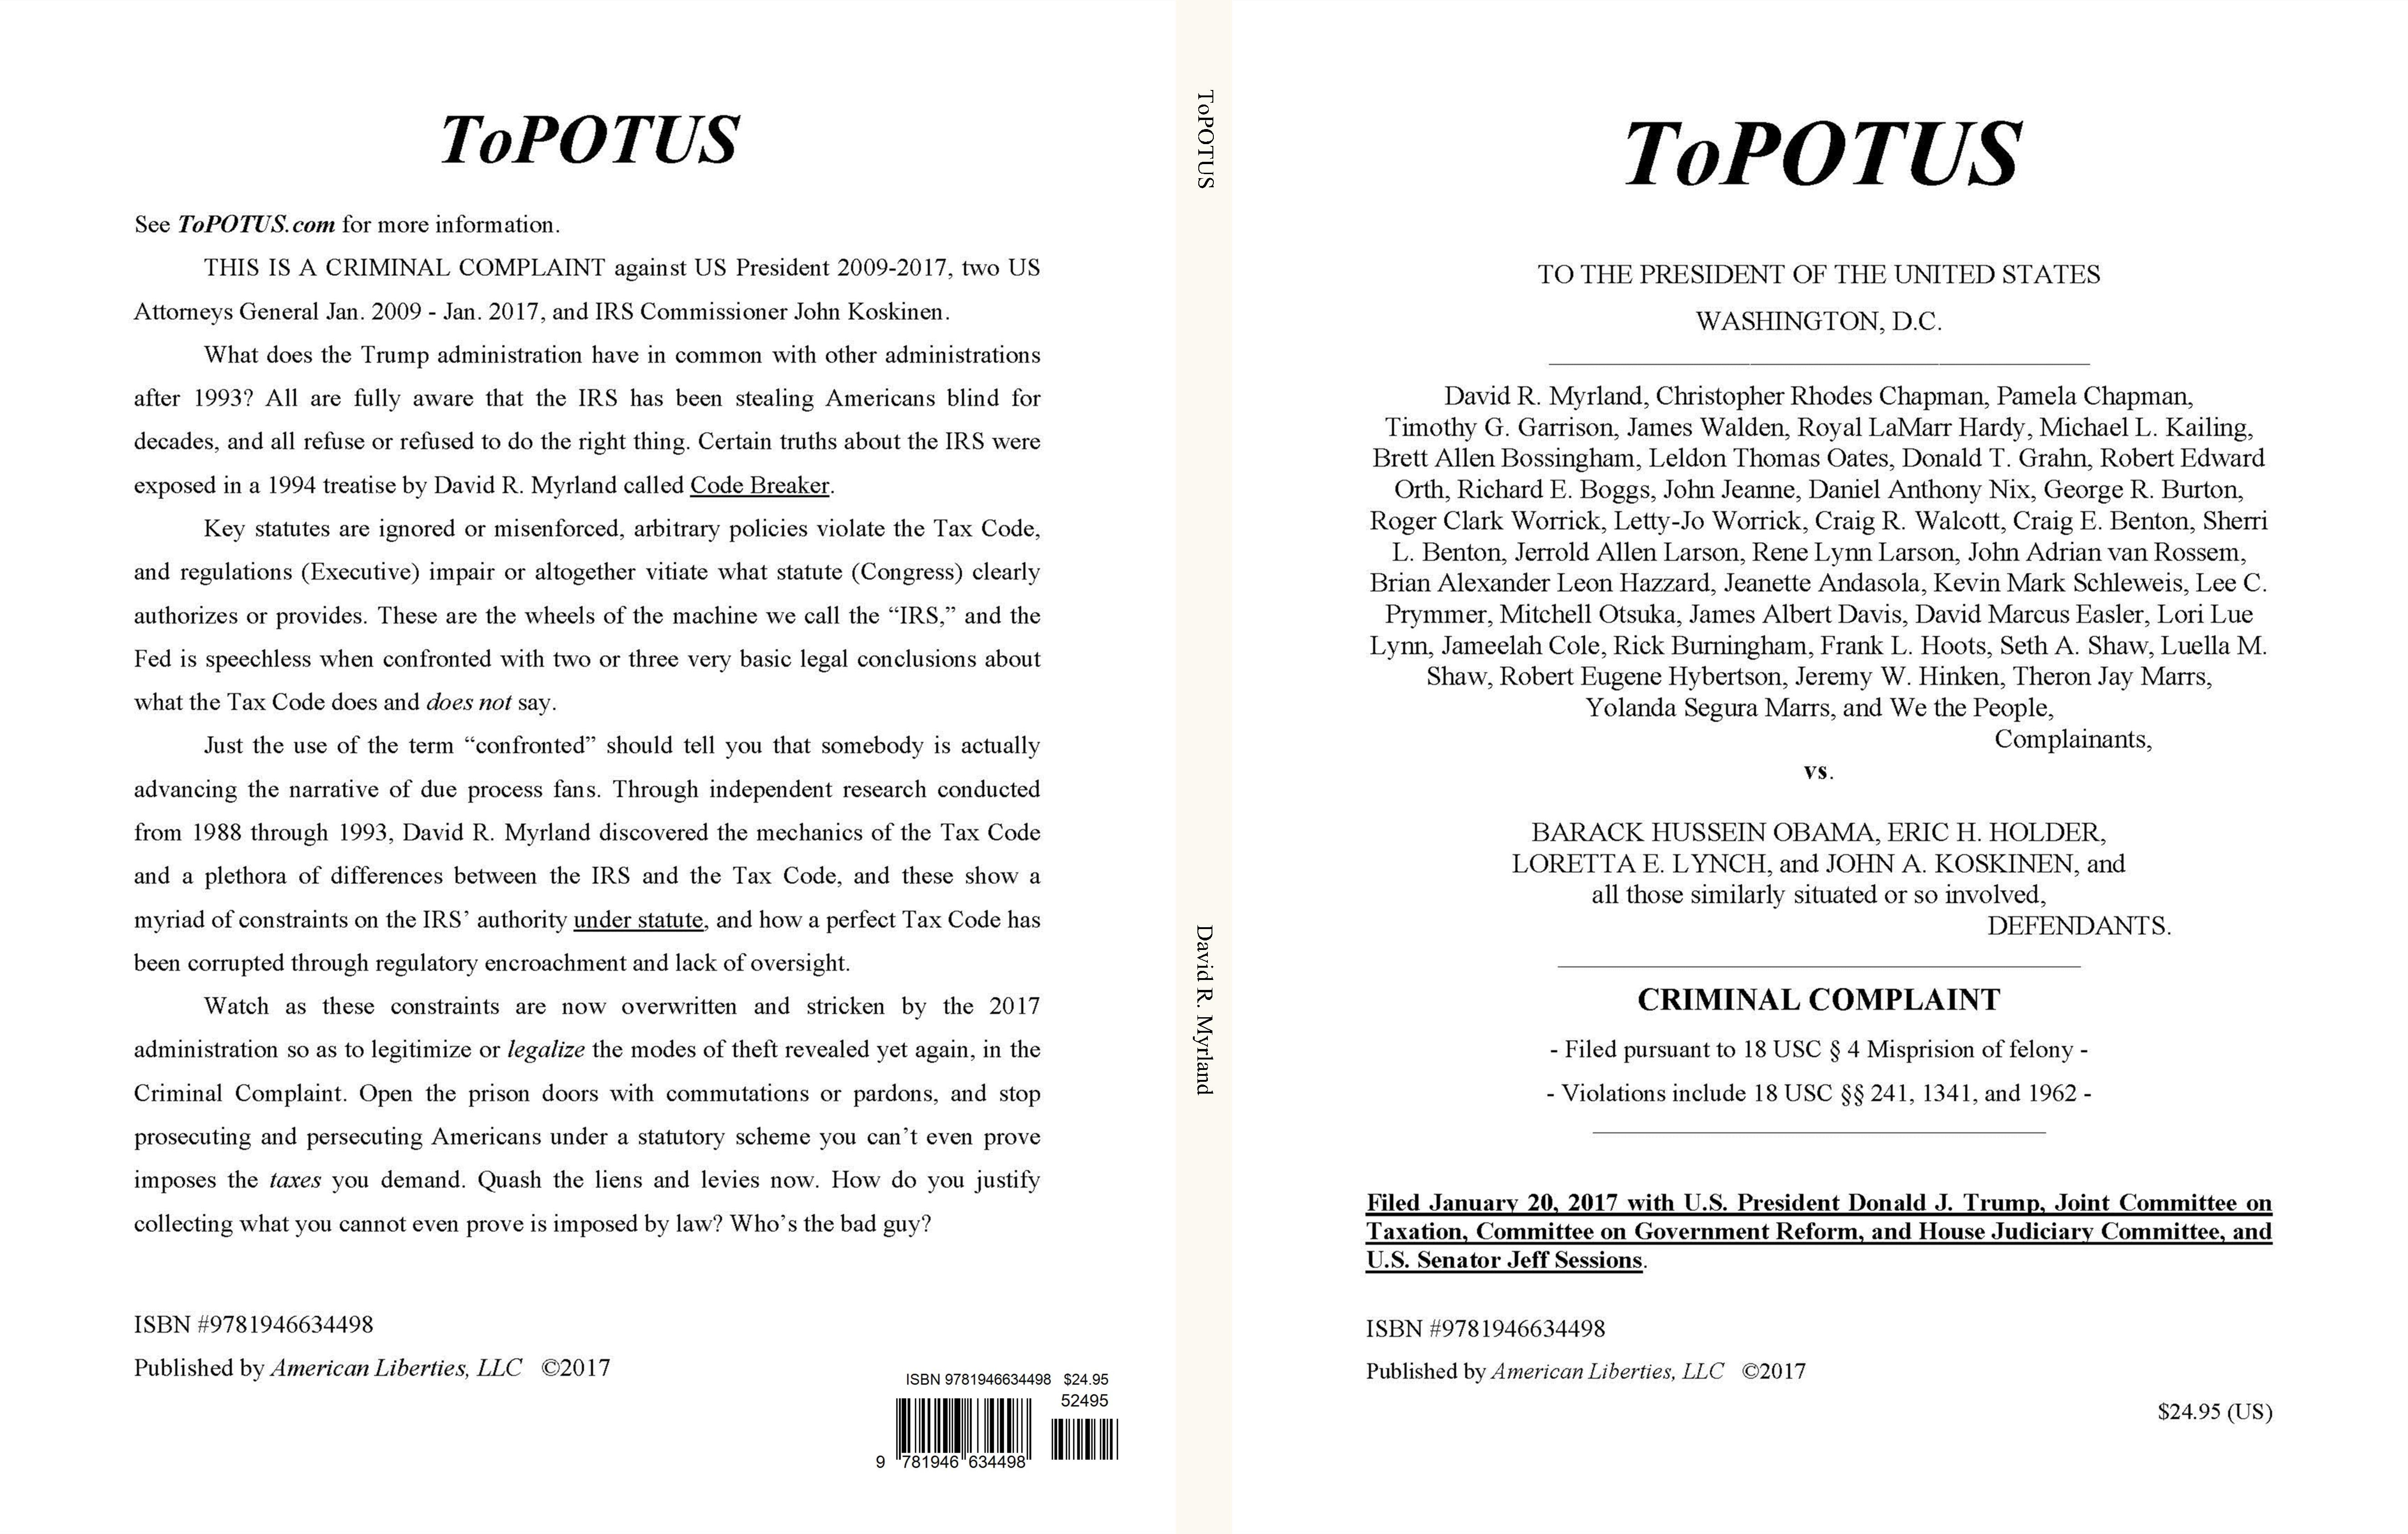 ToPOTUS cover image